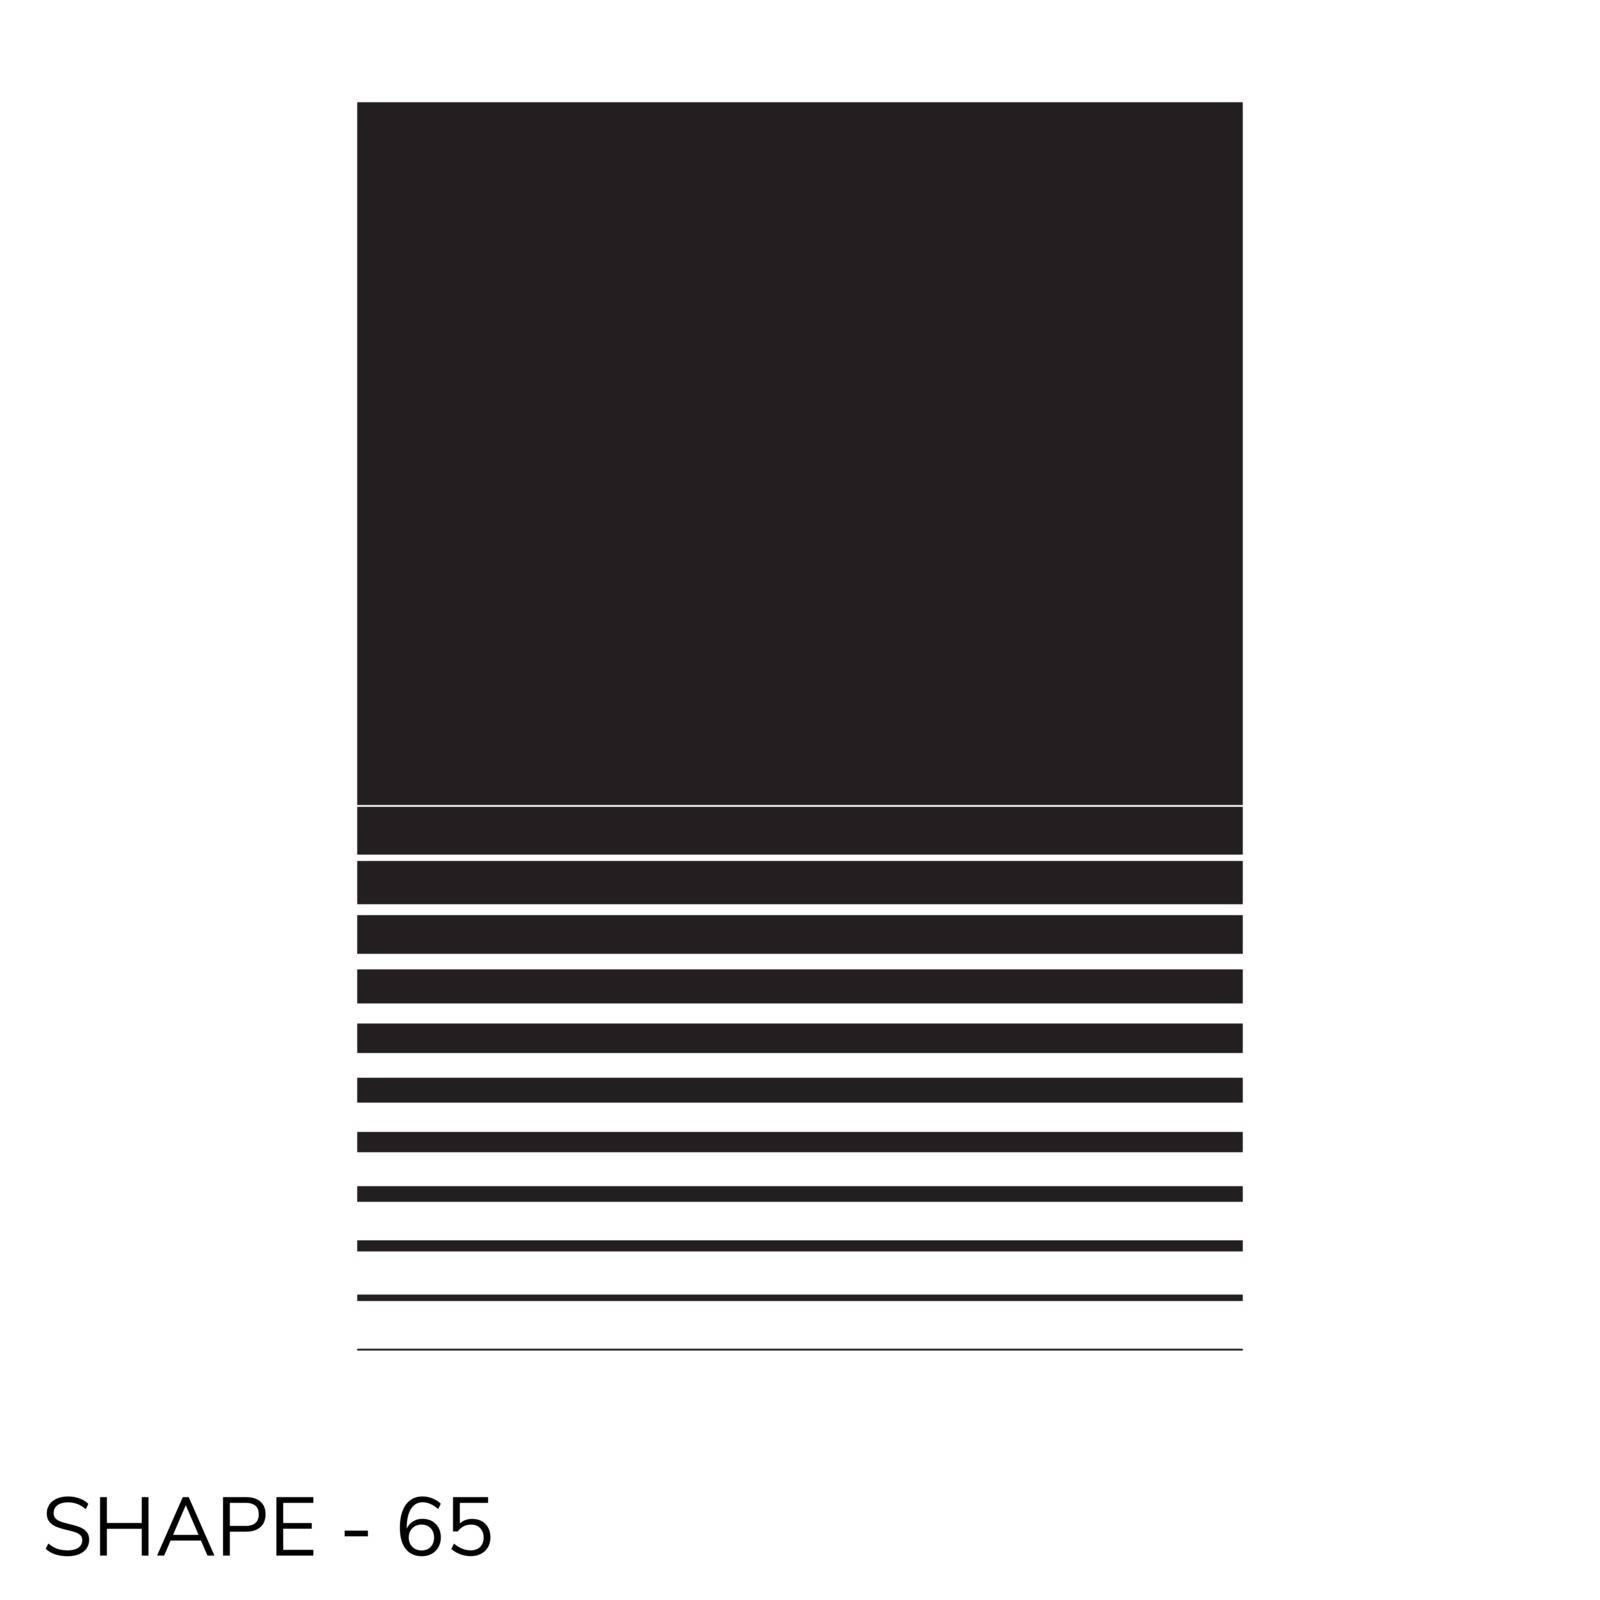 Simple Geometric Shape by Vanzyst